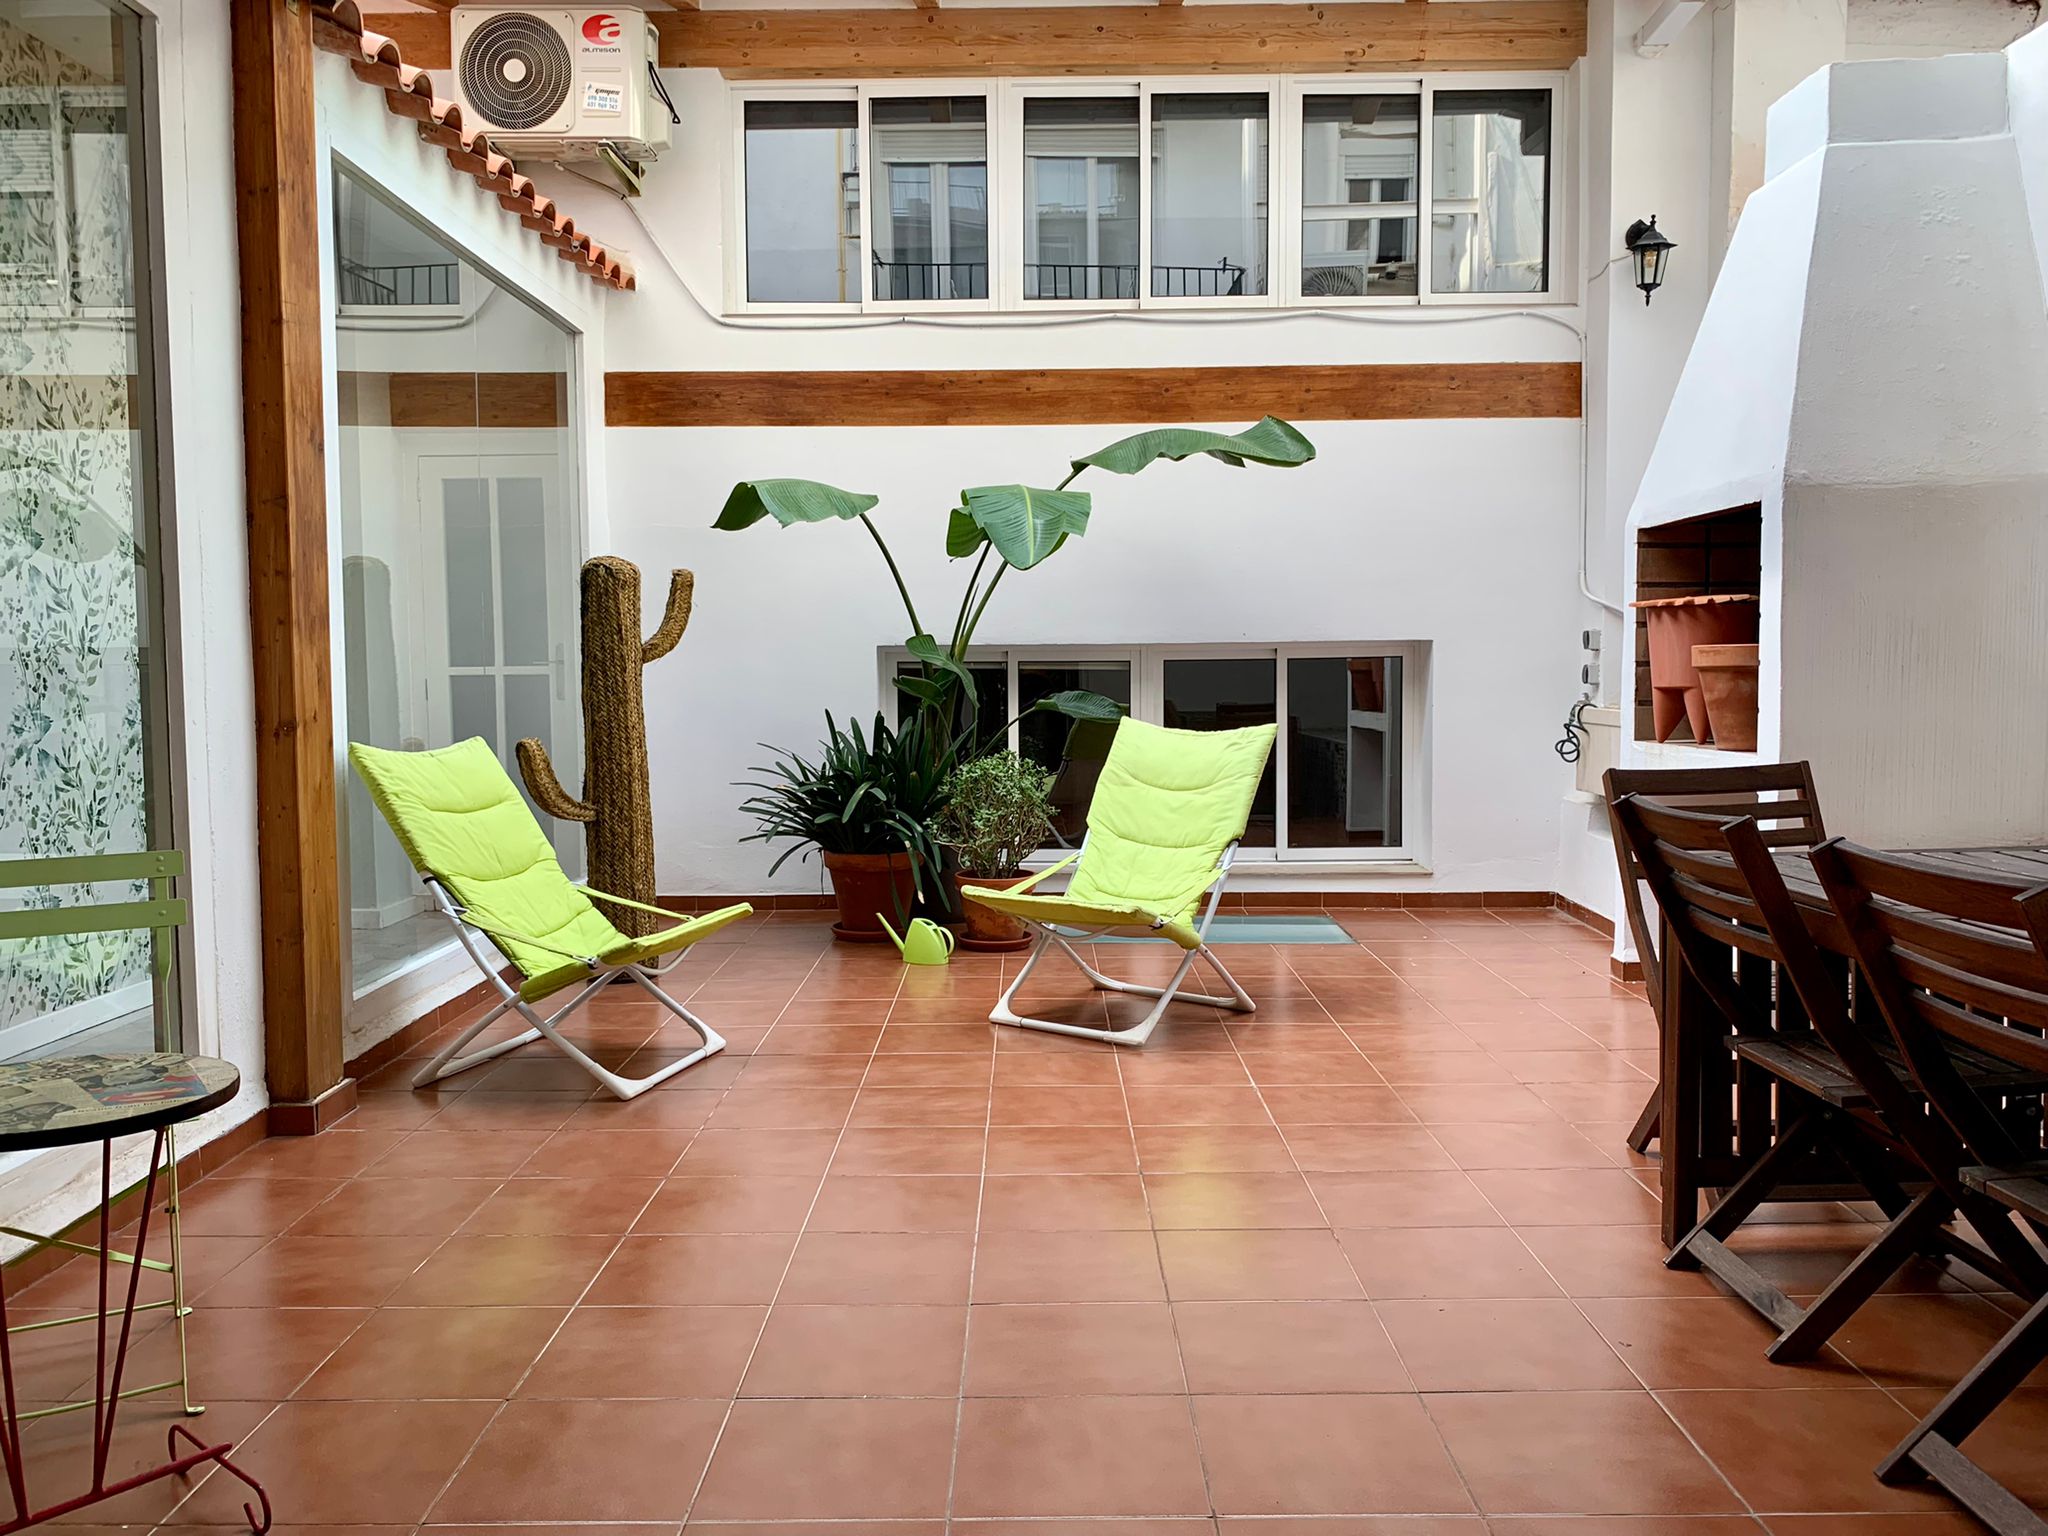 Convento - Exclusive apartment for rent in Valencia